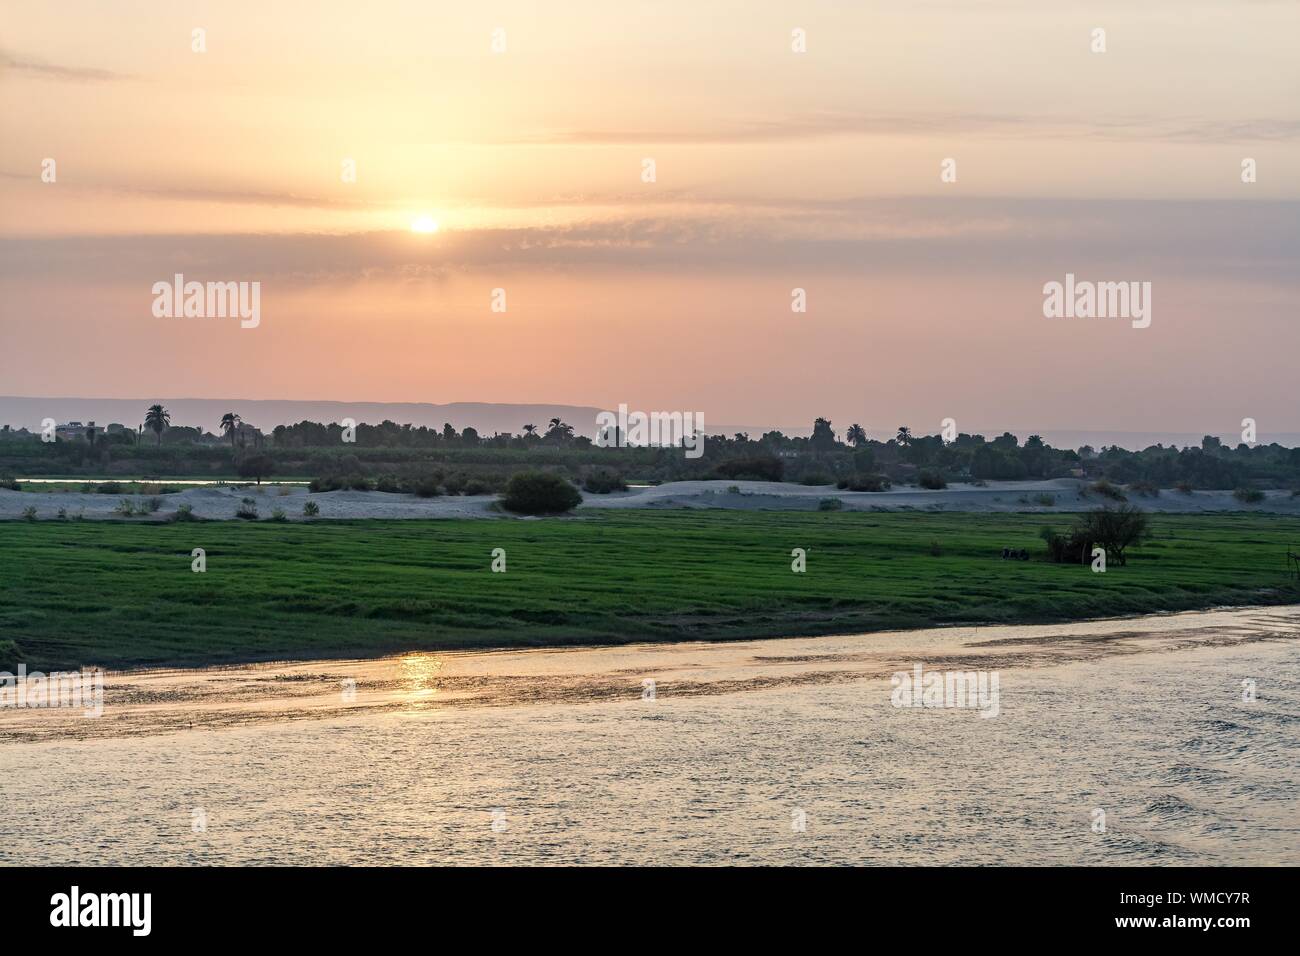 Beautiful sunset over Nile river, Egypt Stock Photo